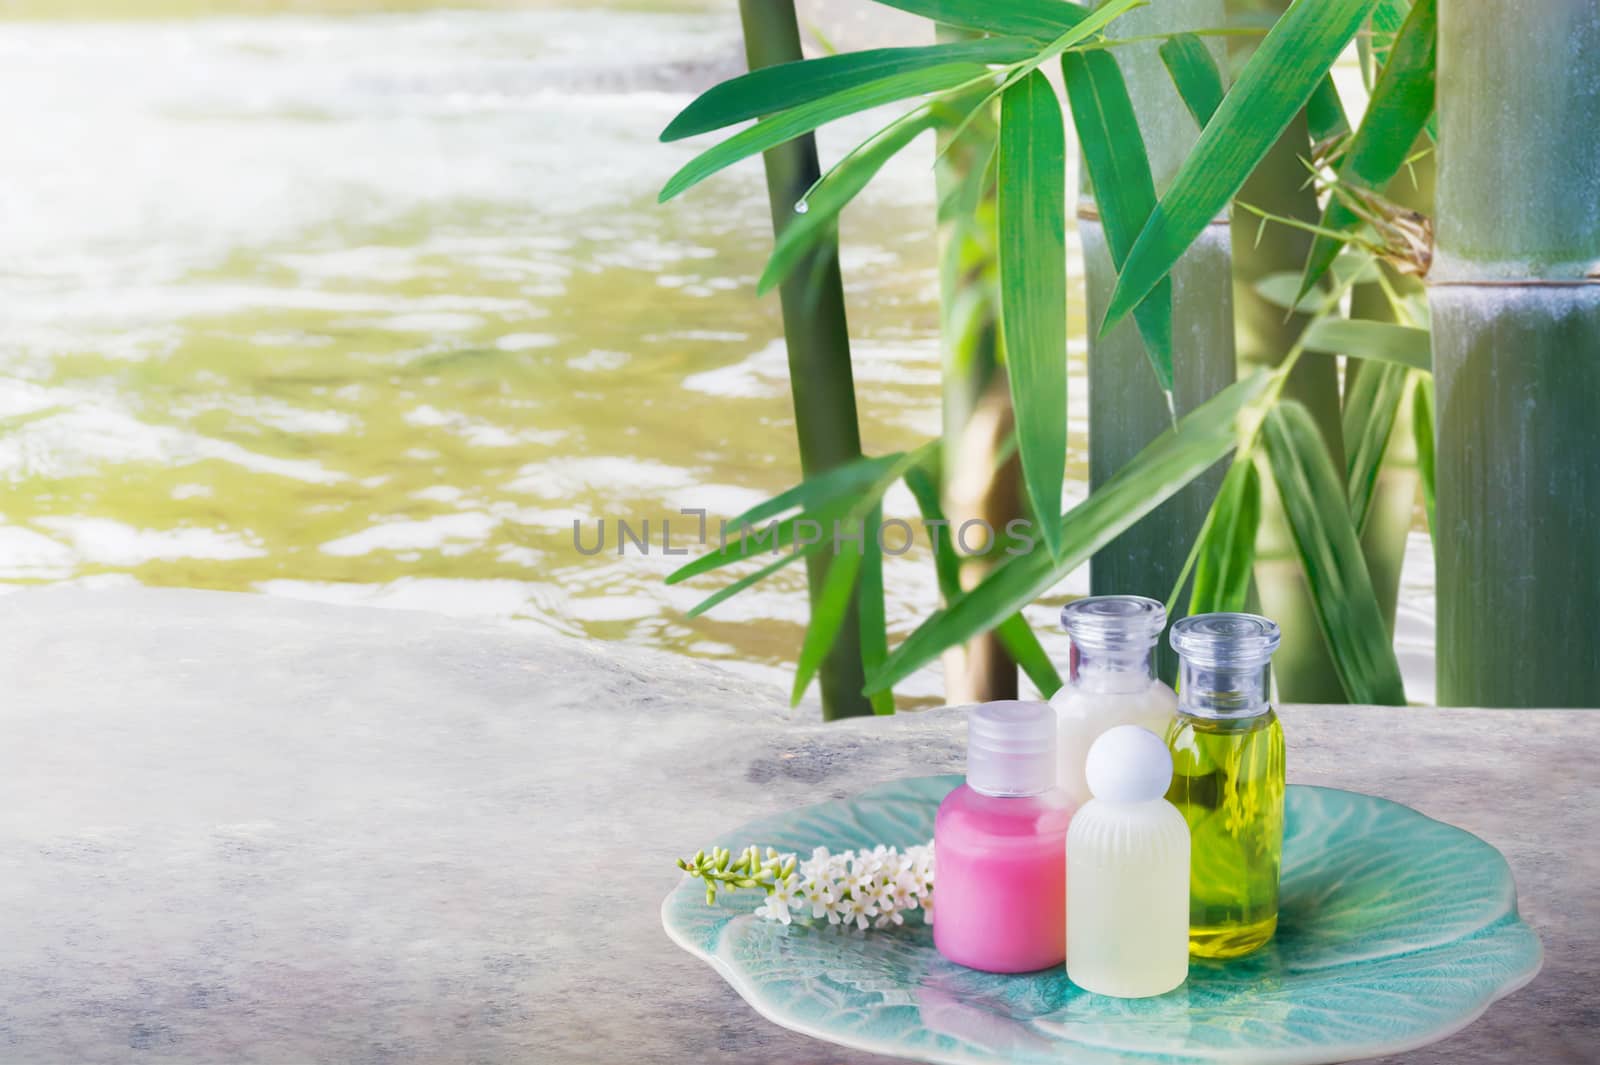 Mini set of bubble bath and shower gel liquid and frangipani flo by KAZITAFAHNIZEER